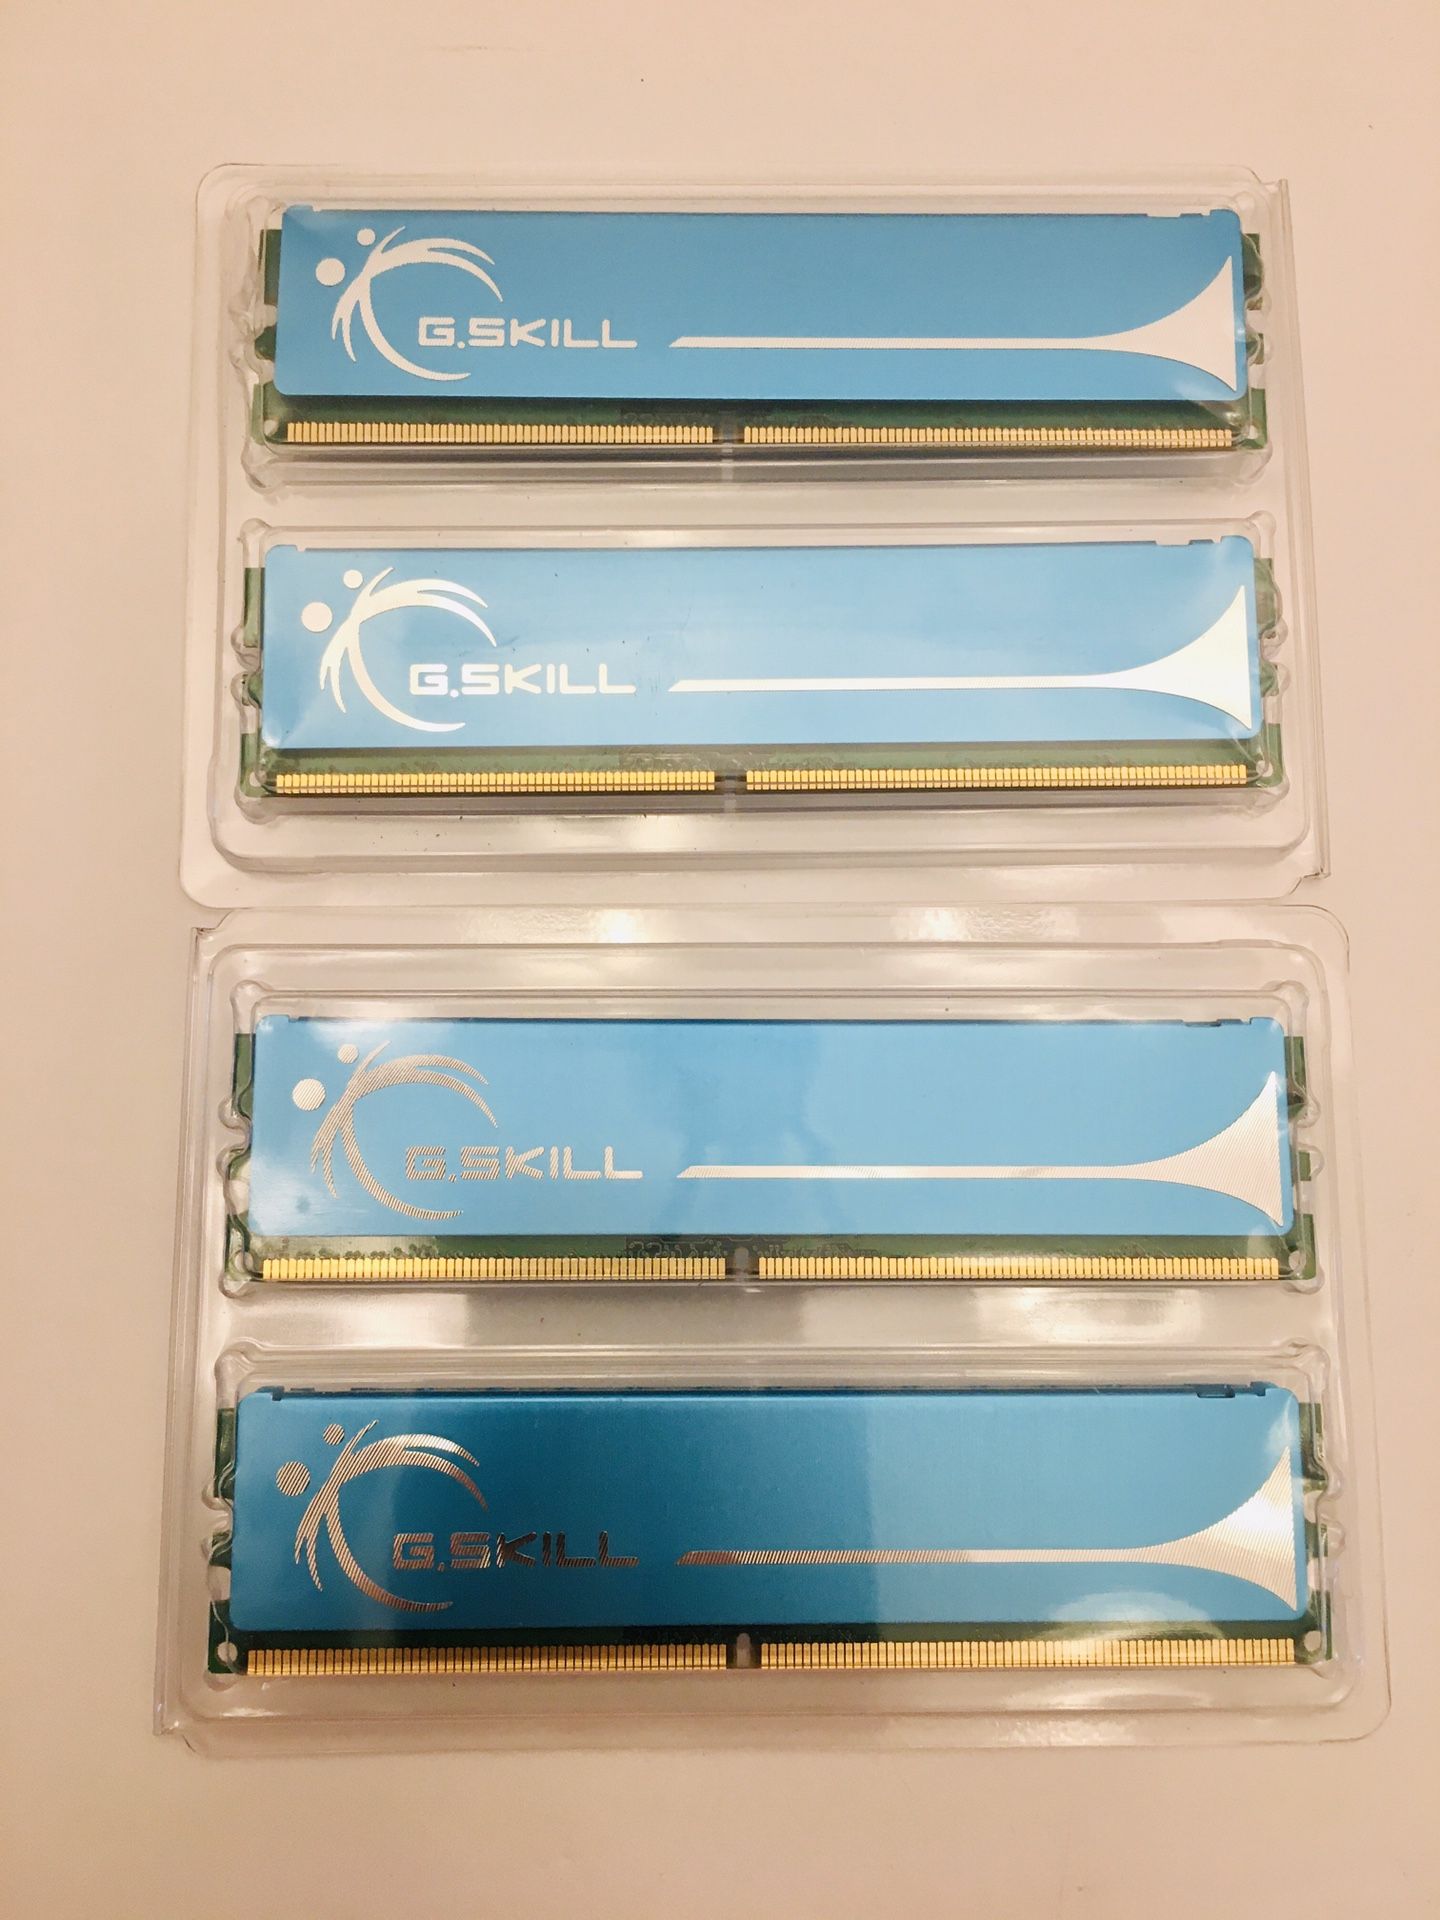 G.SKILL 4GB (4x 1GB) Computer Desktop Ram Memory Drives Laptop Accessories